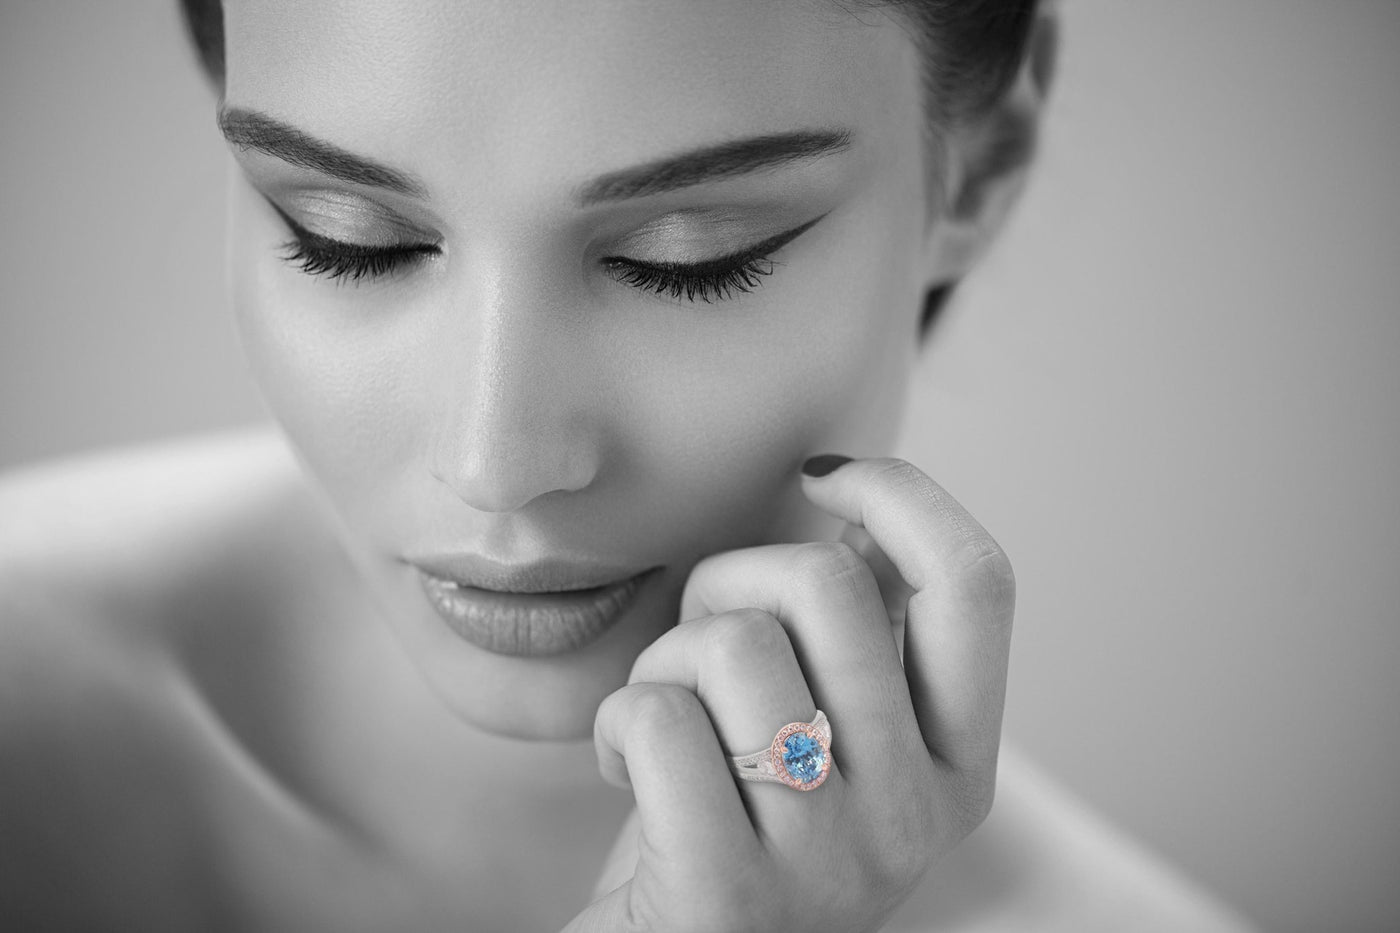 "Antique Muse" natural blue zircon ring - Surround Art & Diamonds Jewelry by Surround Art & Diamonds